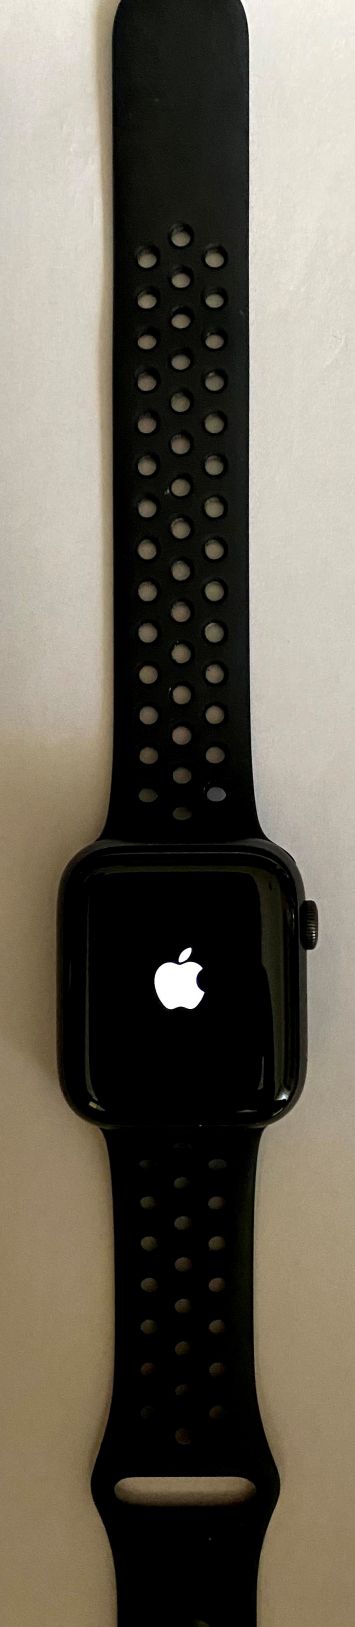 vender-apple-watch-watch-series-4-apple-segunda-mano-19382115220201011085236-15